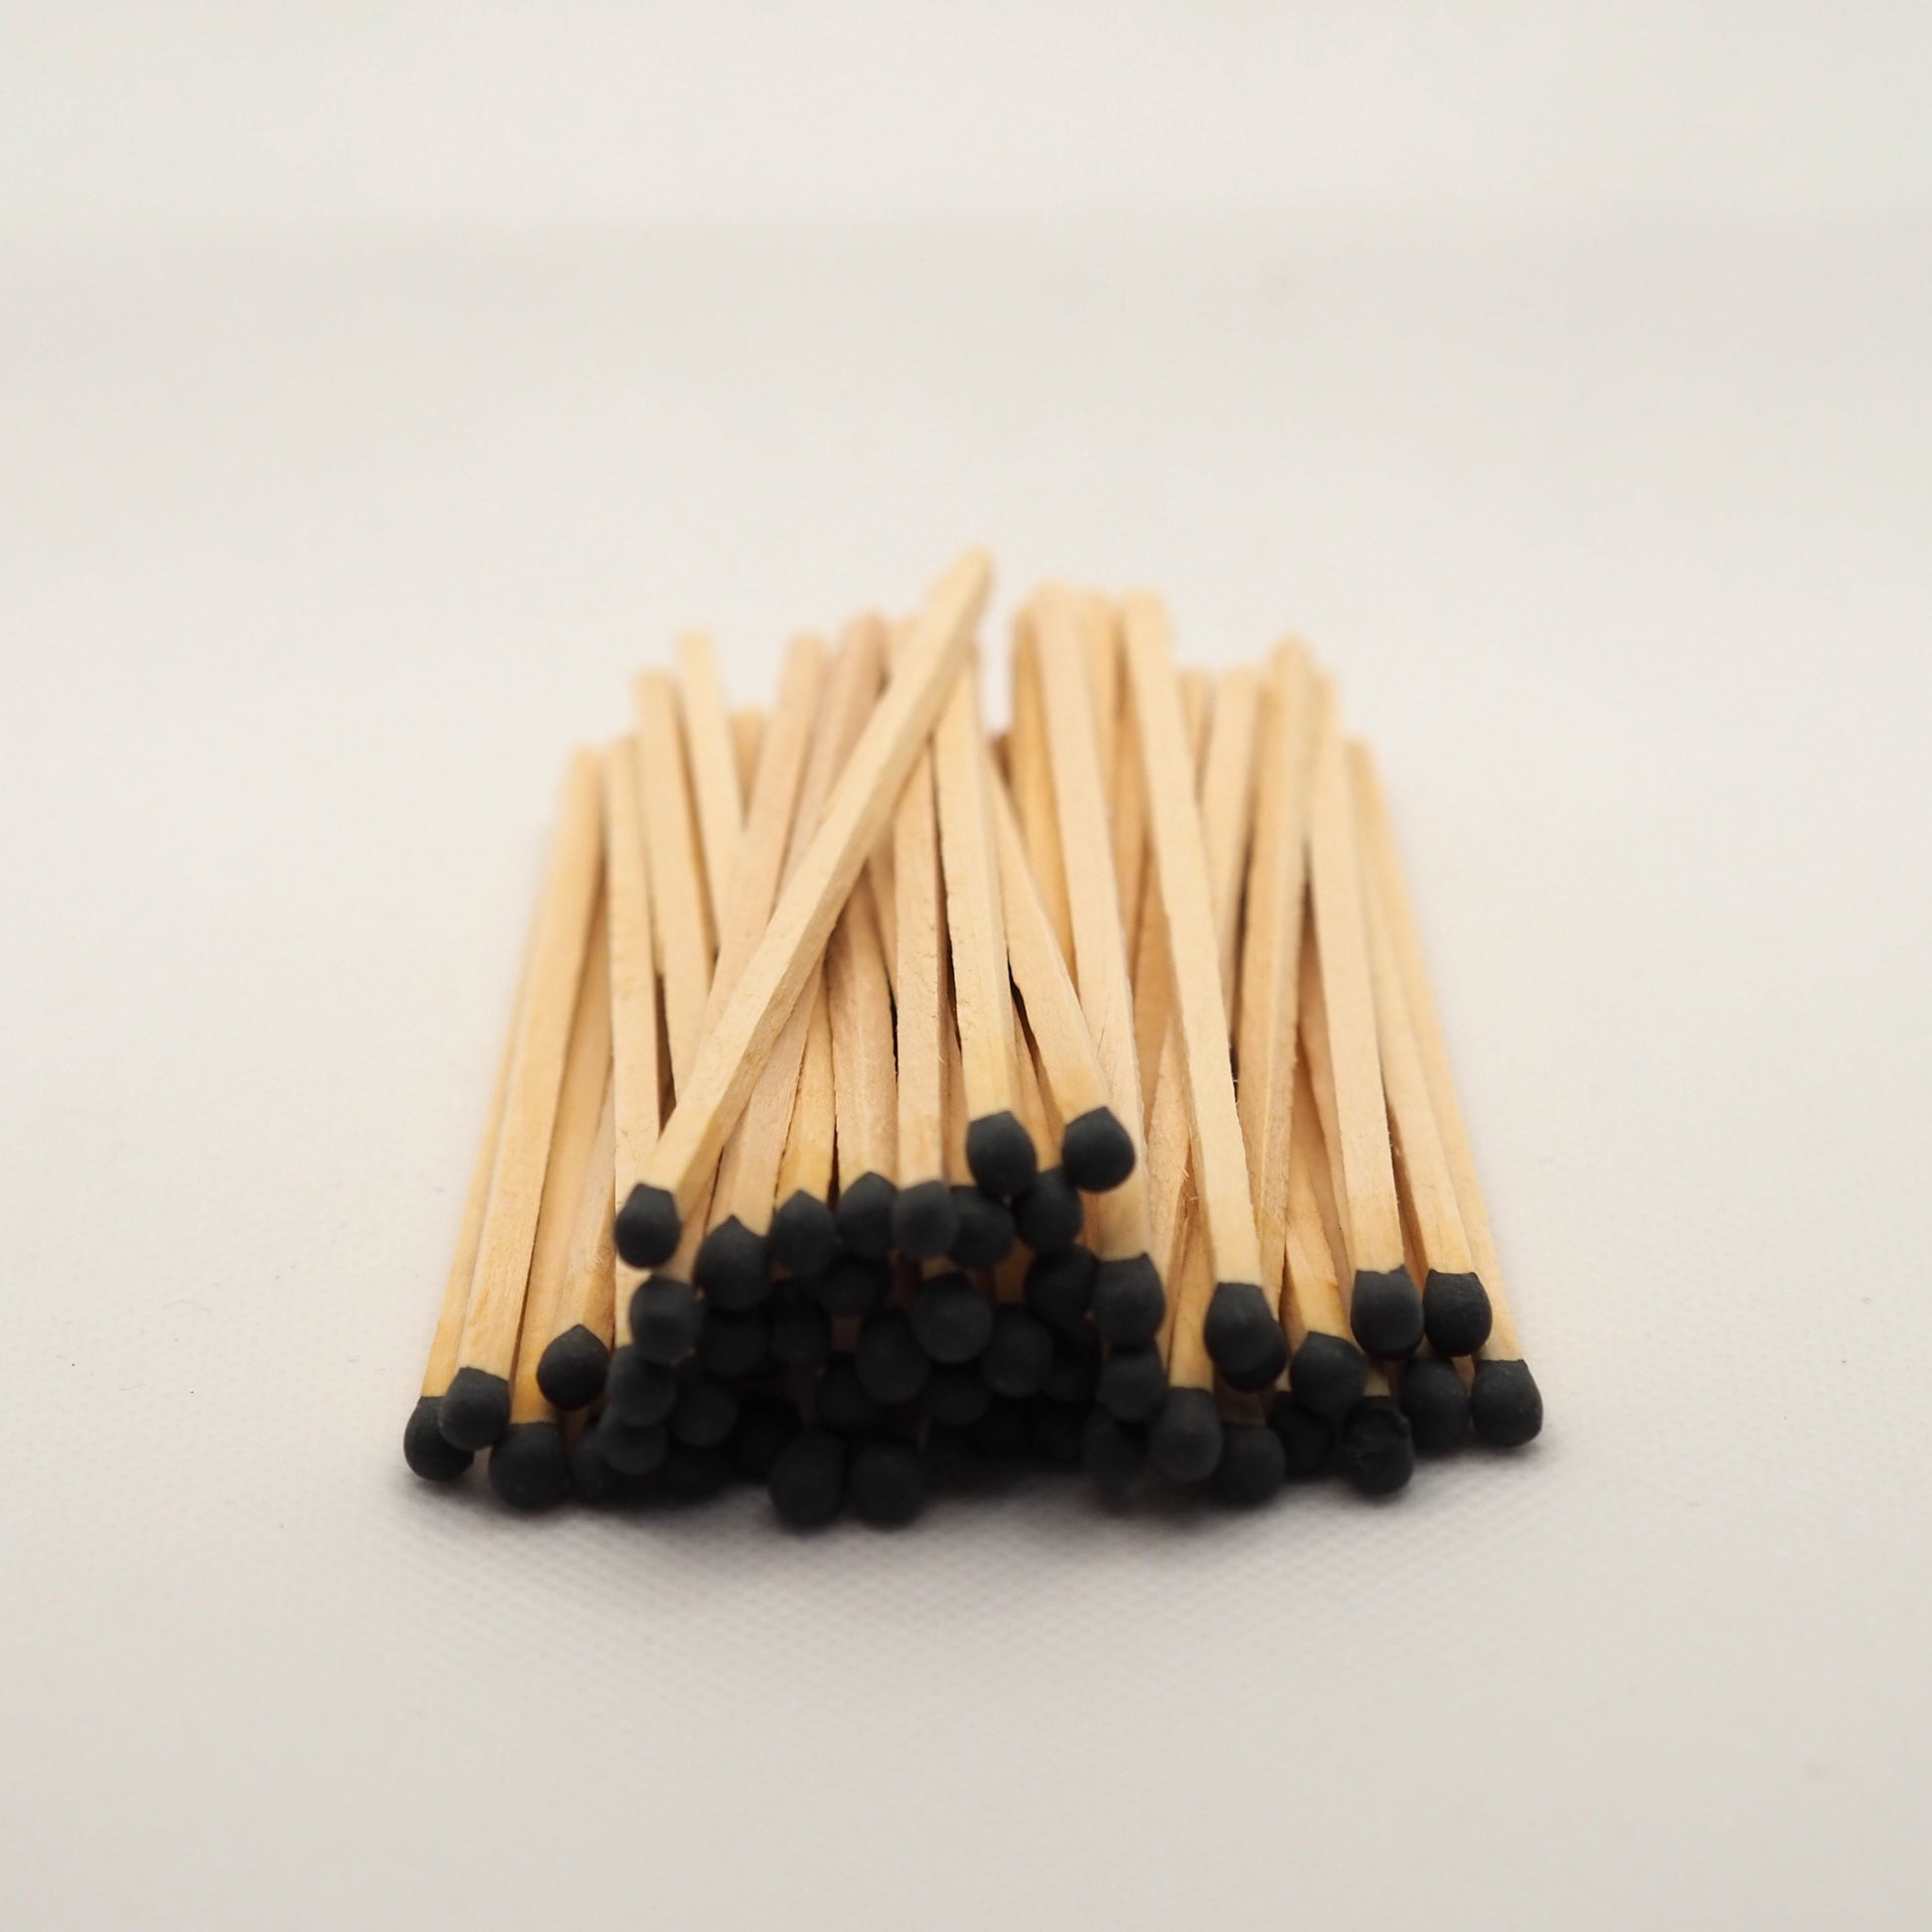 Black tip matches